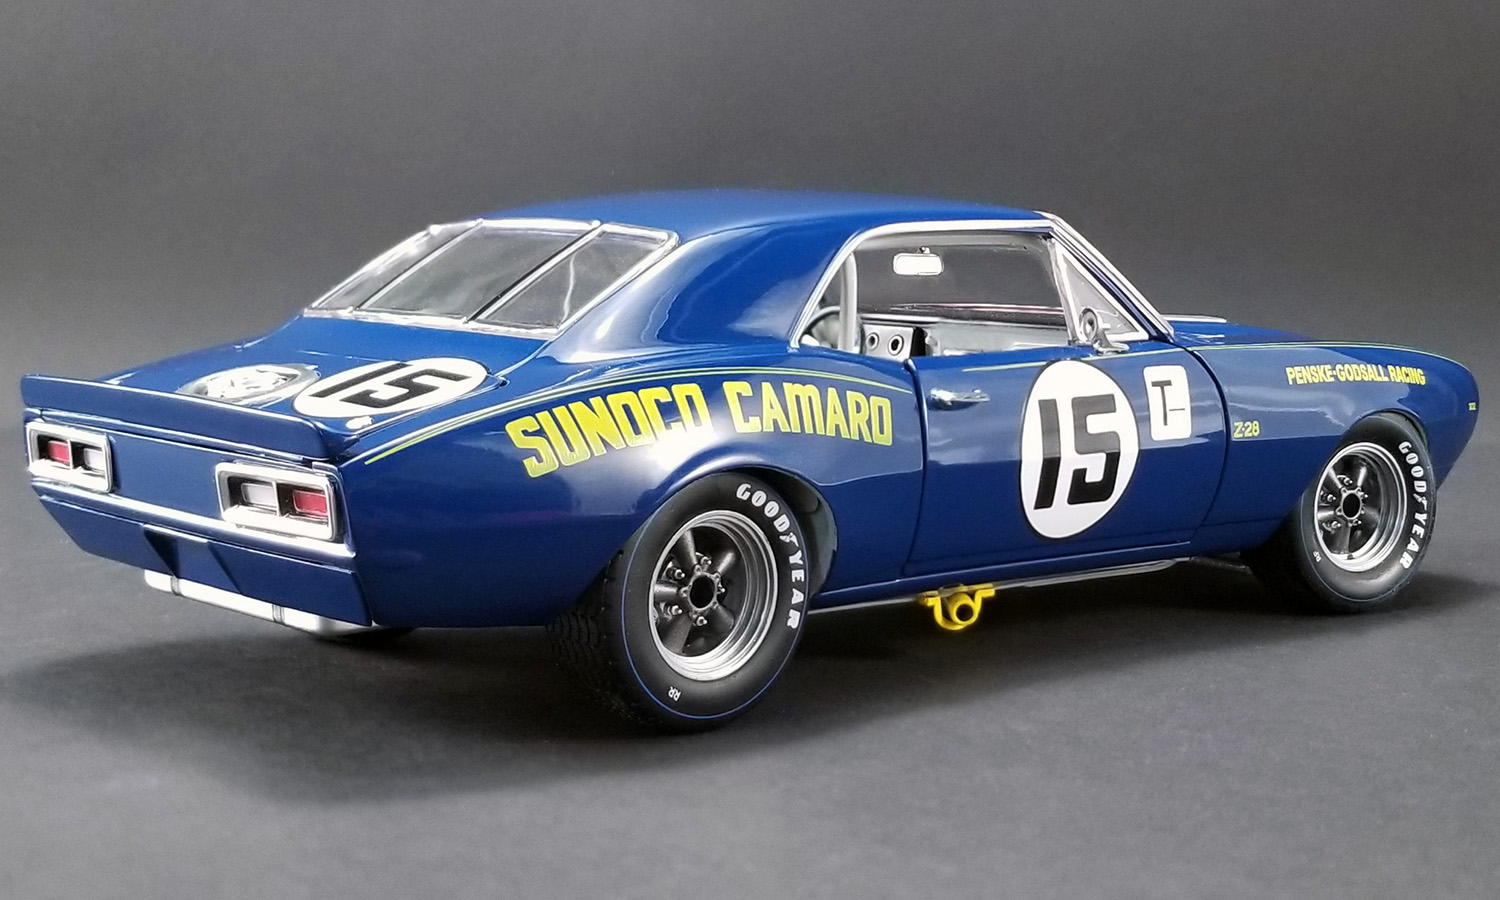 Sunoco racing-Mark Donohue-gmp 1:18-18833 Chevrolet trans am Camaro z/28 